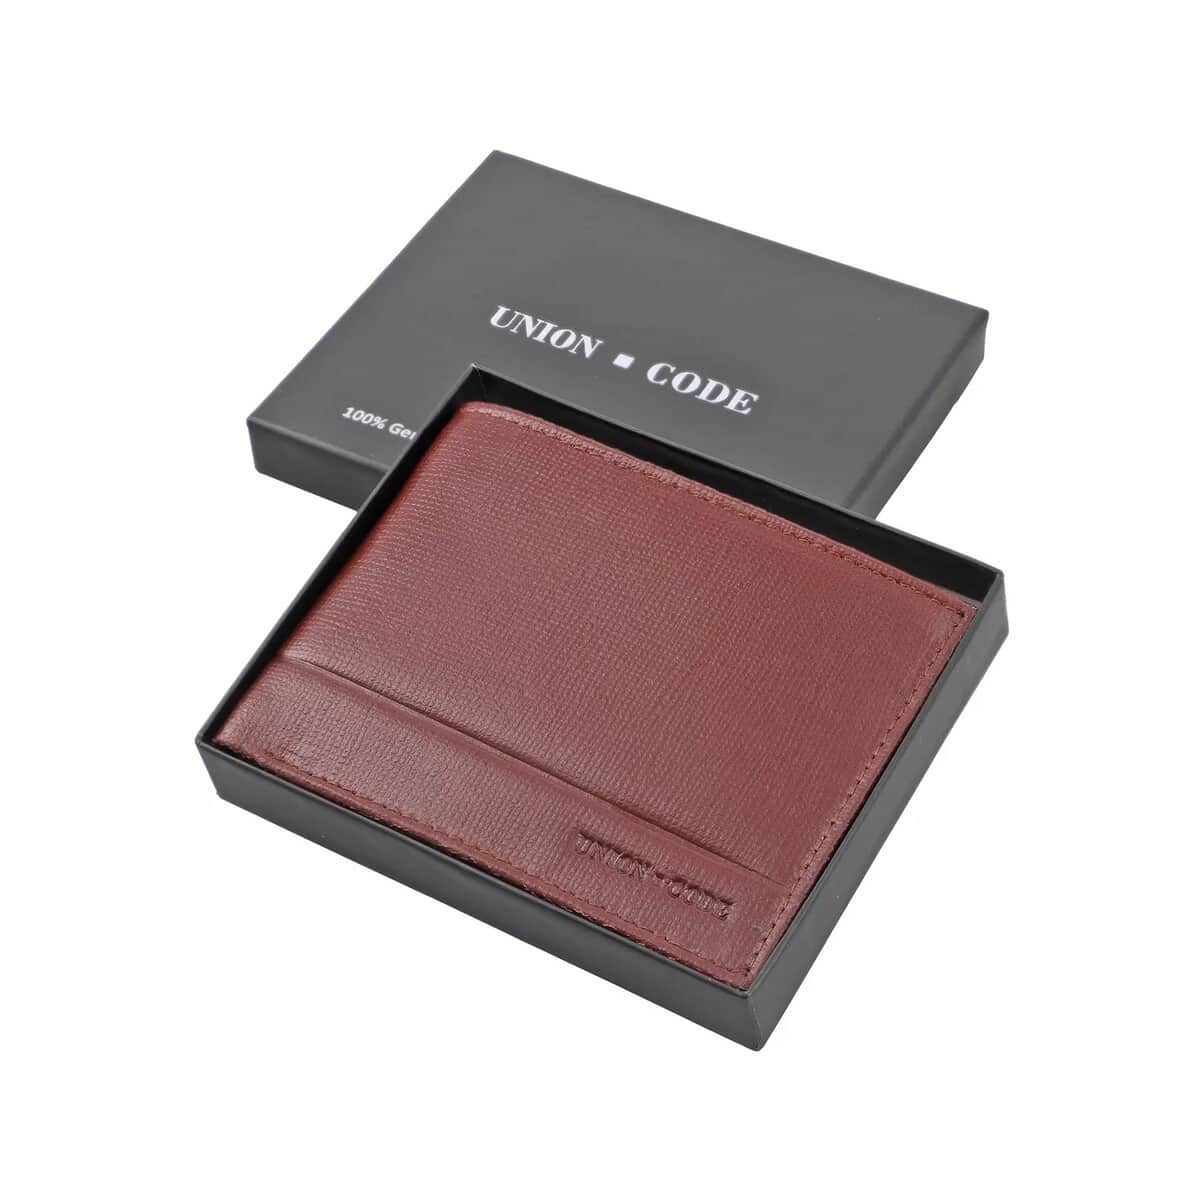 UNION CODE Bordo Genuine Leather RFID Bi Fold Men's Wallet | Leather Card Holder Travel Wallet | Leather Purse for Men image number 6